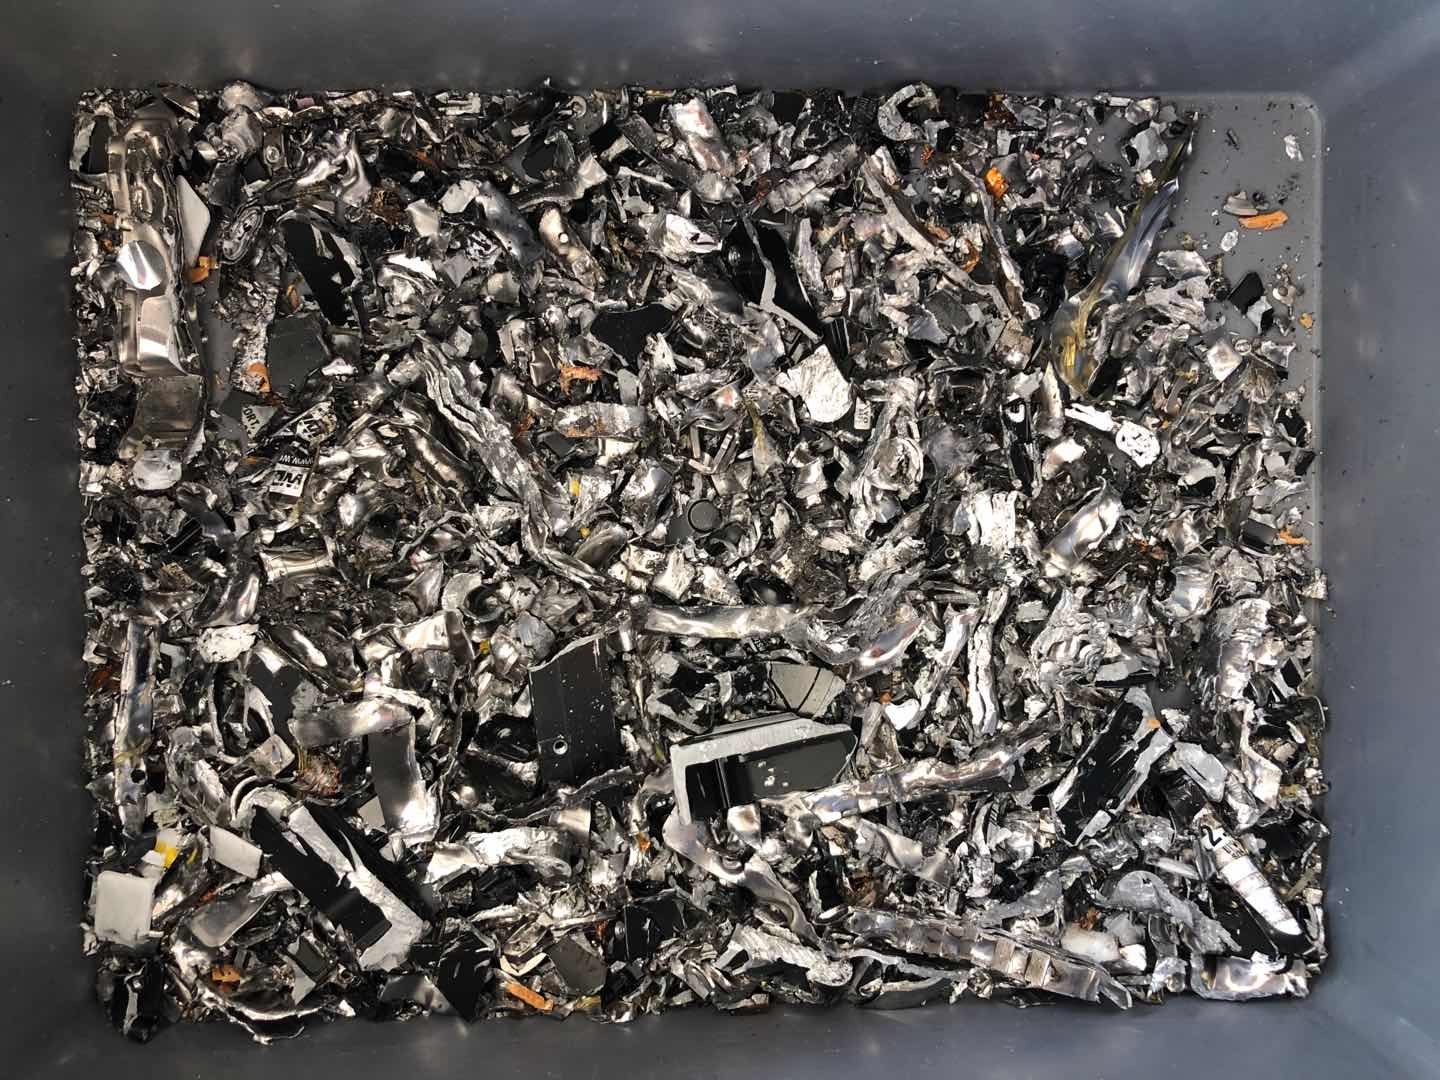 shredding particle